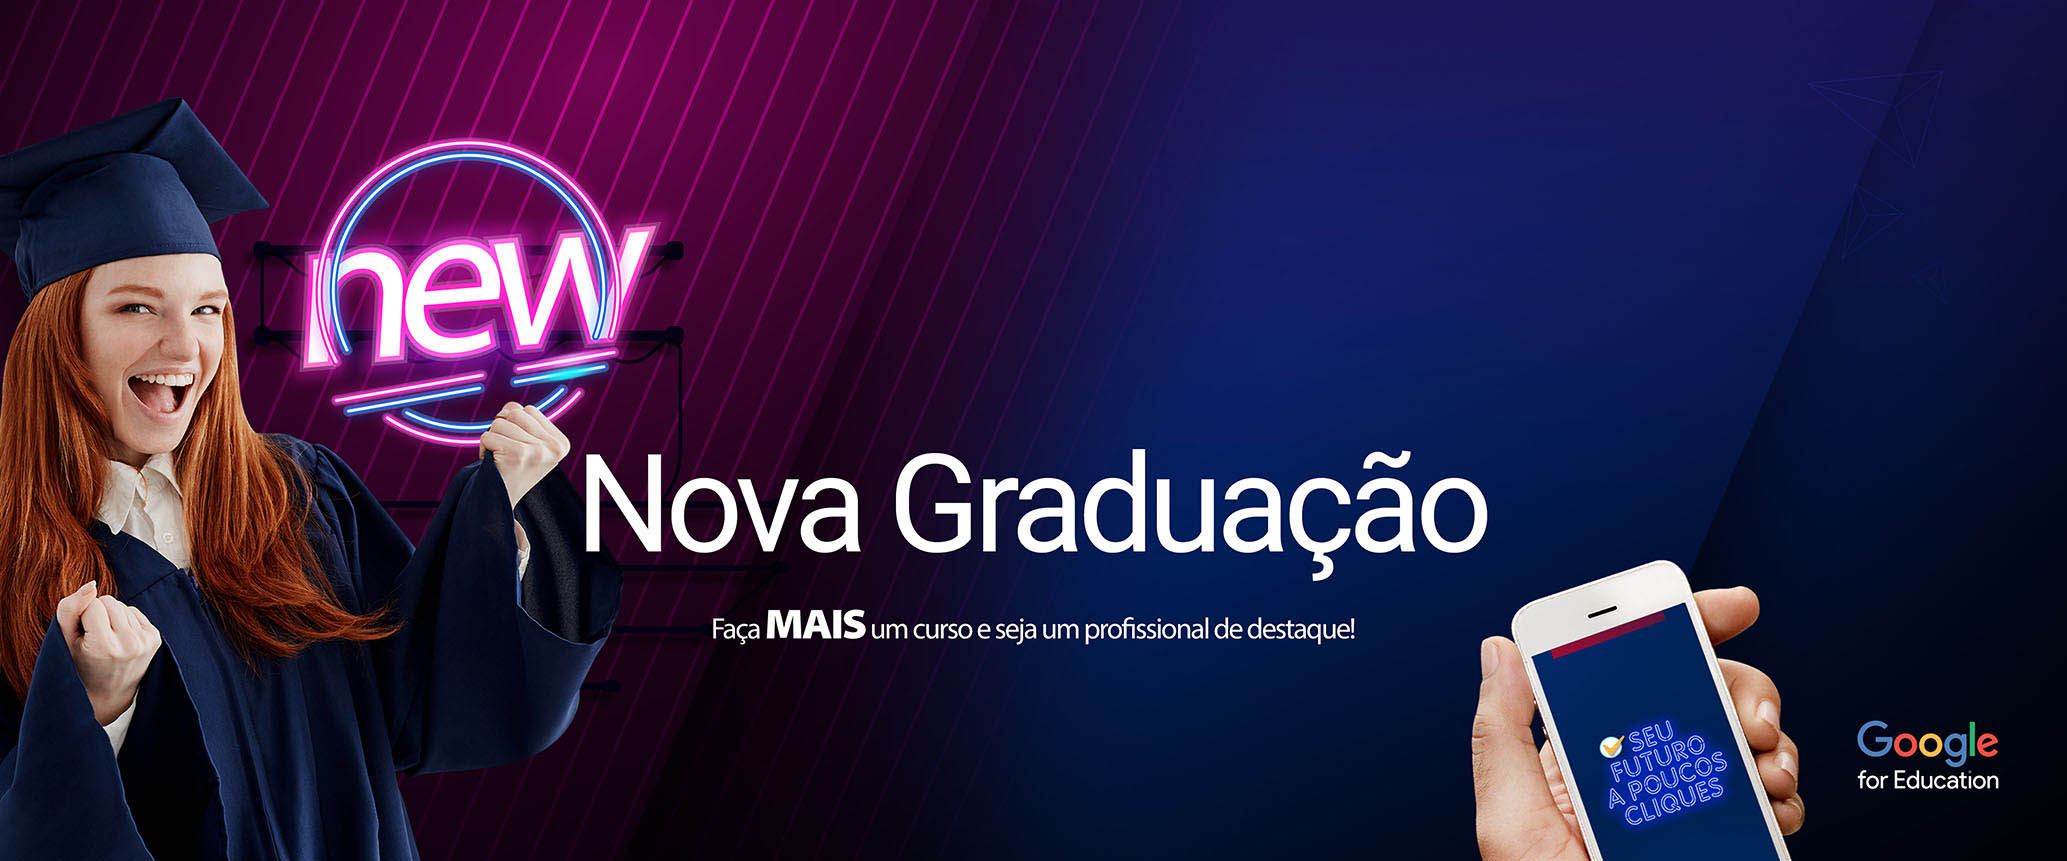 banner_nova_graduacao (2)